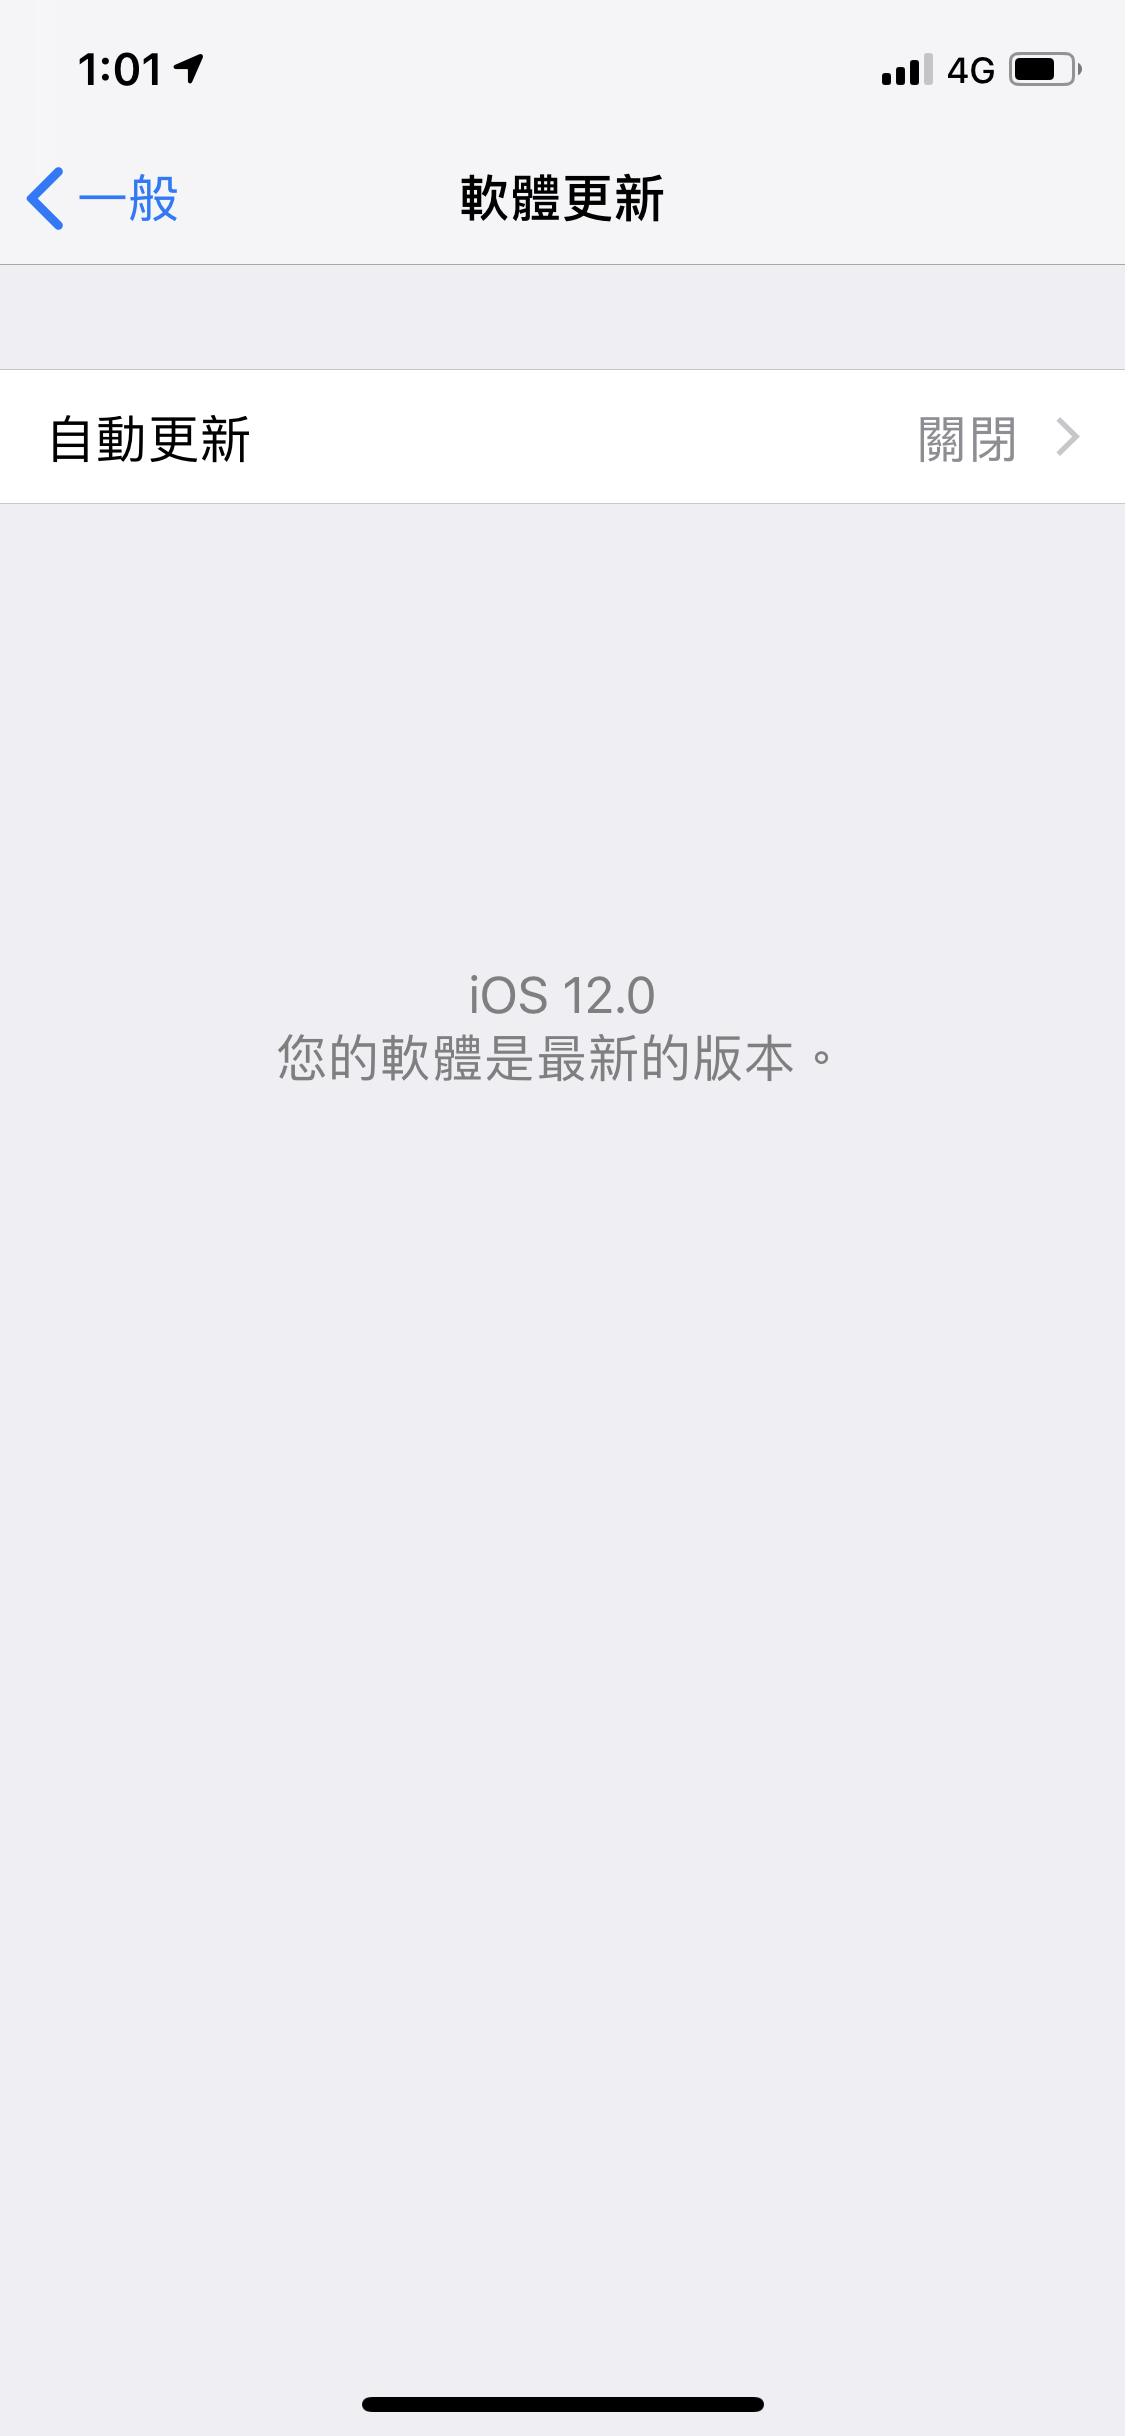 iOS 12、Beta